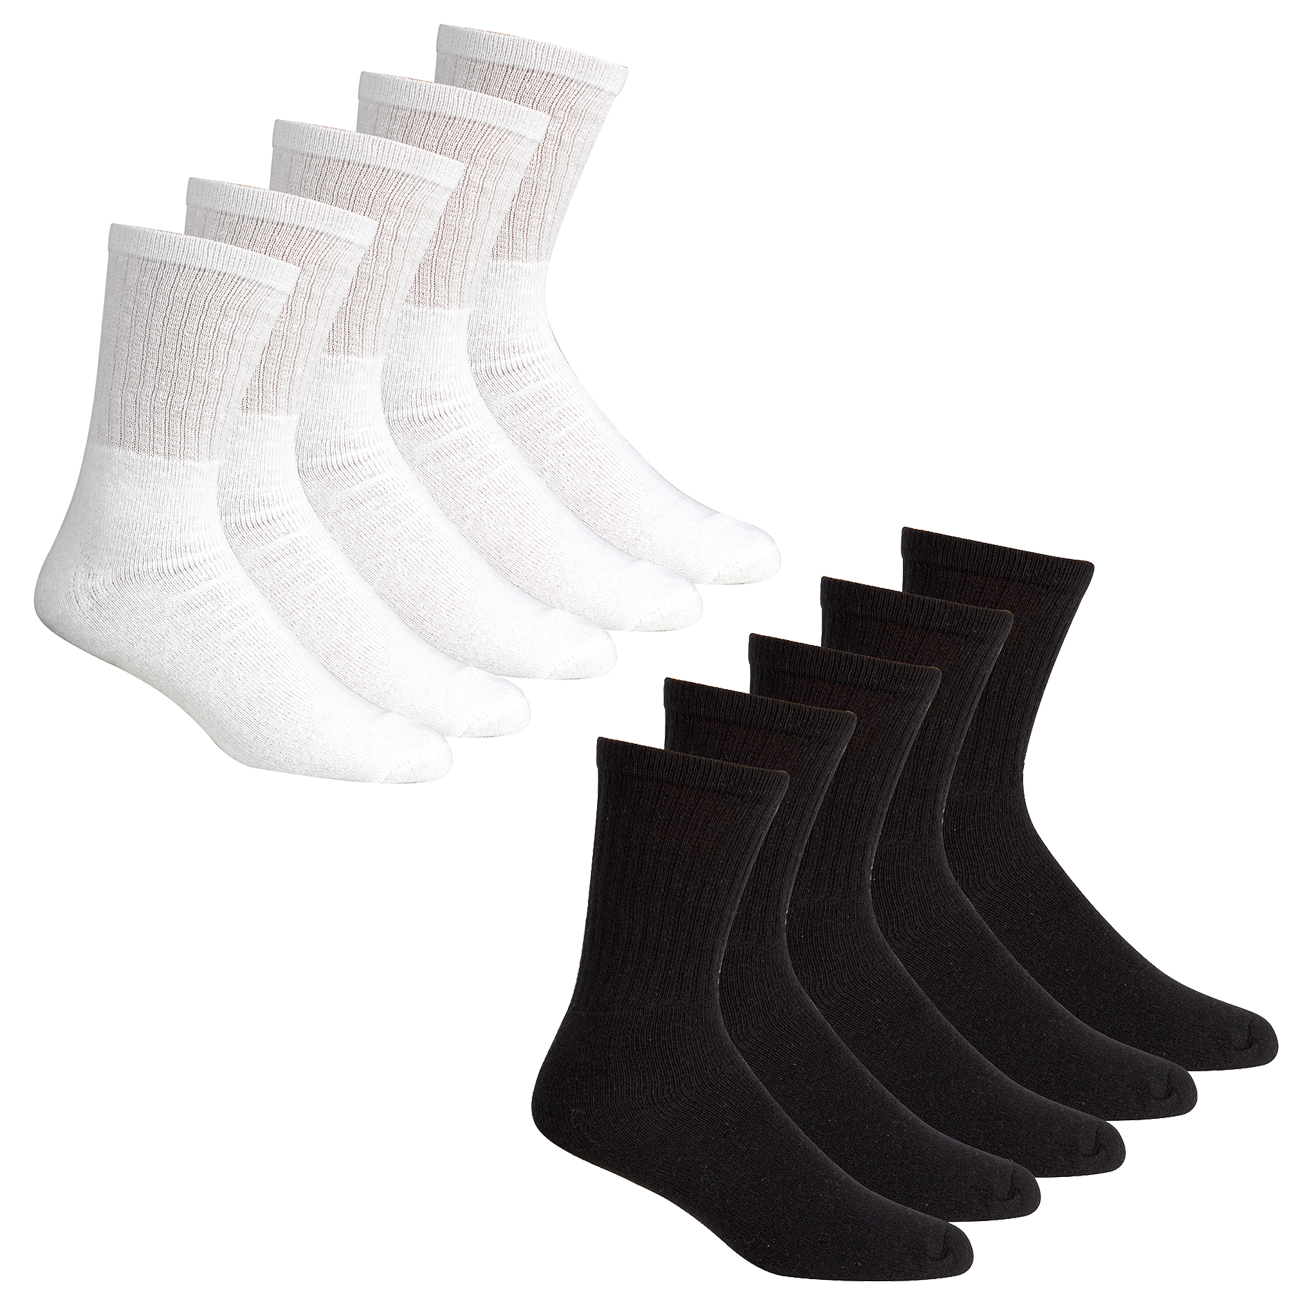 Metzuyan Men's Cotton Rich Sports Socks Work Everyday Big Foot King Size 12-14 